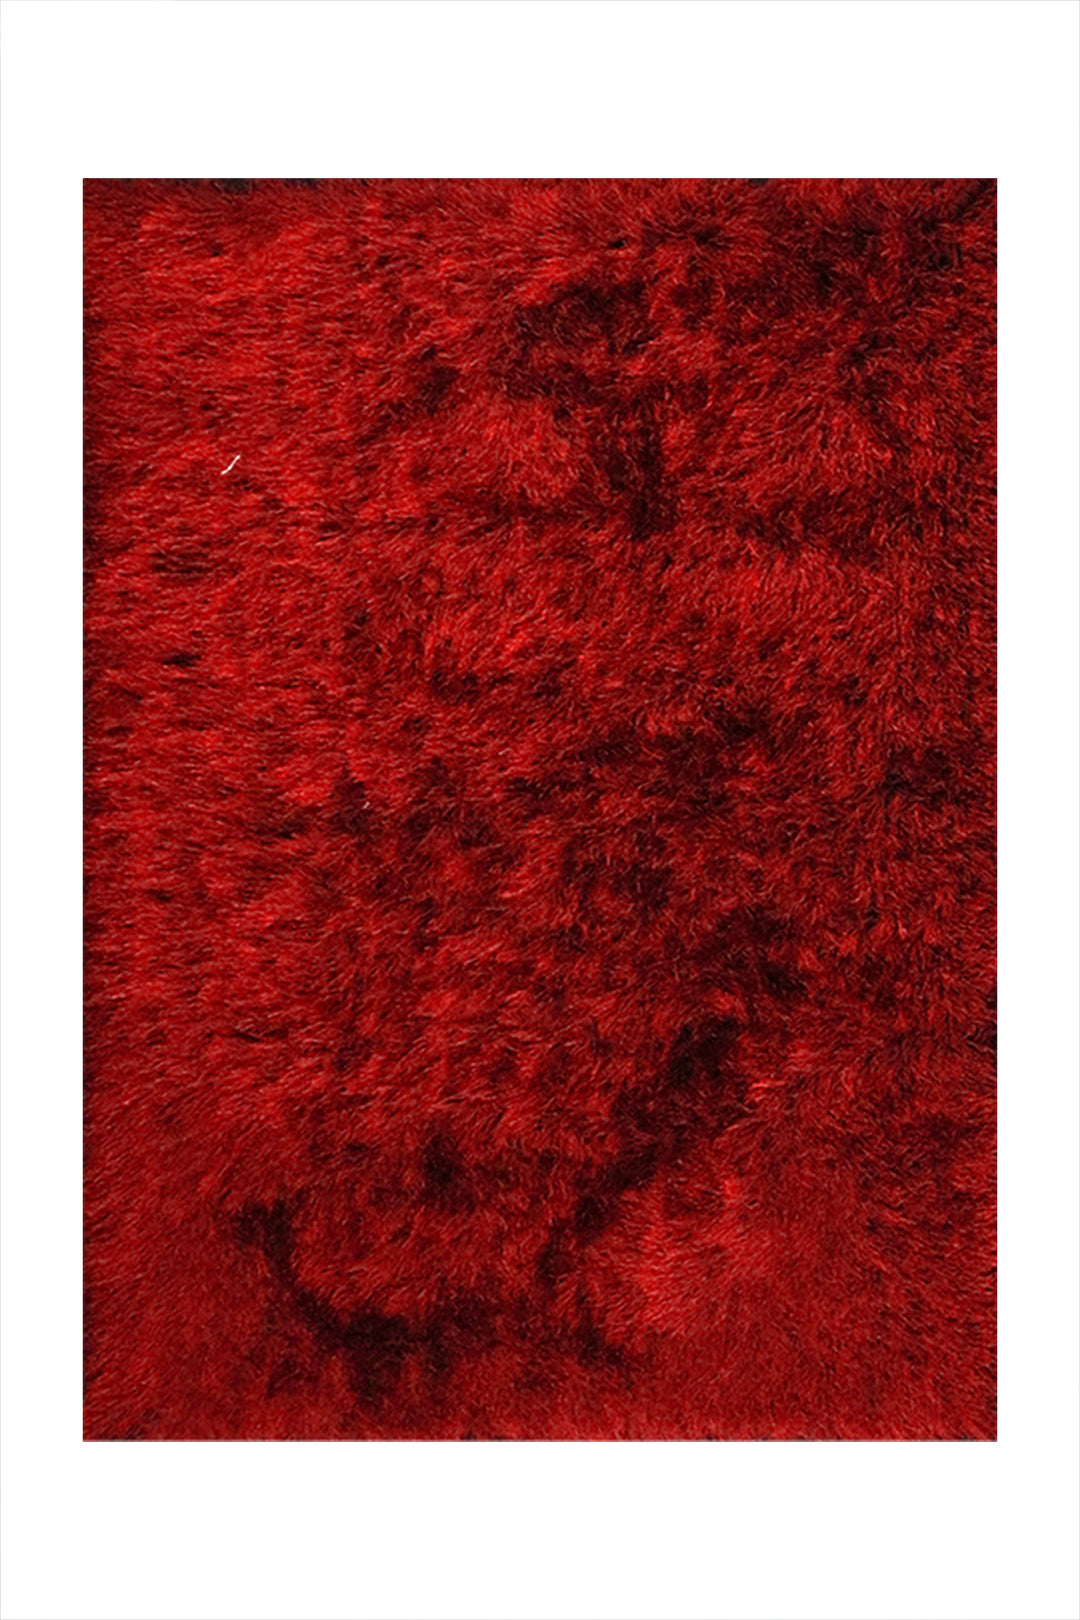 Turkish Plush and Soft  Heaven Shaggy Rug - Maroon - 3.9 x 5.5 FT - Fluffy Furry Floor Decor Rug Heaven Shaggy